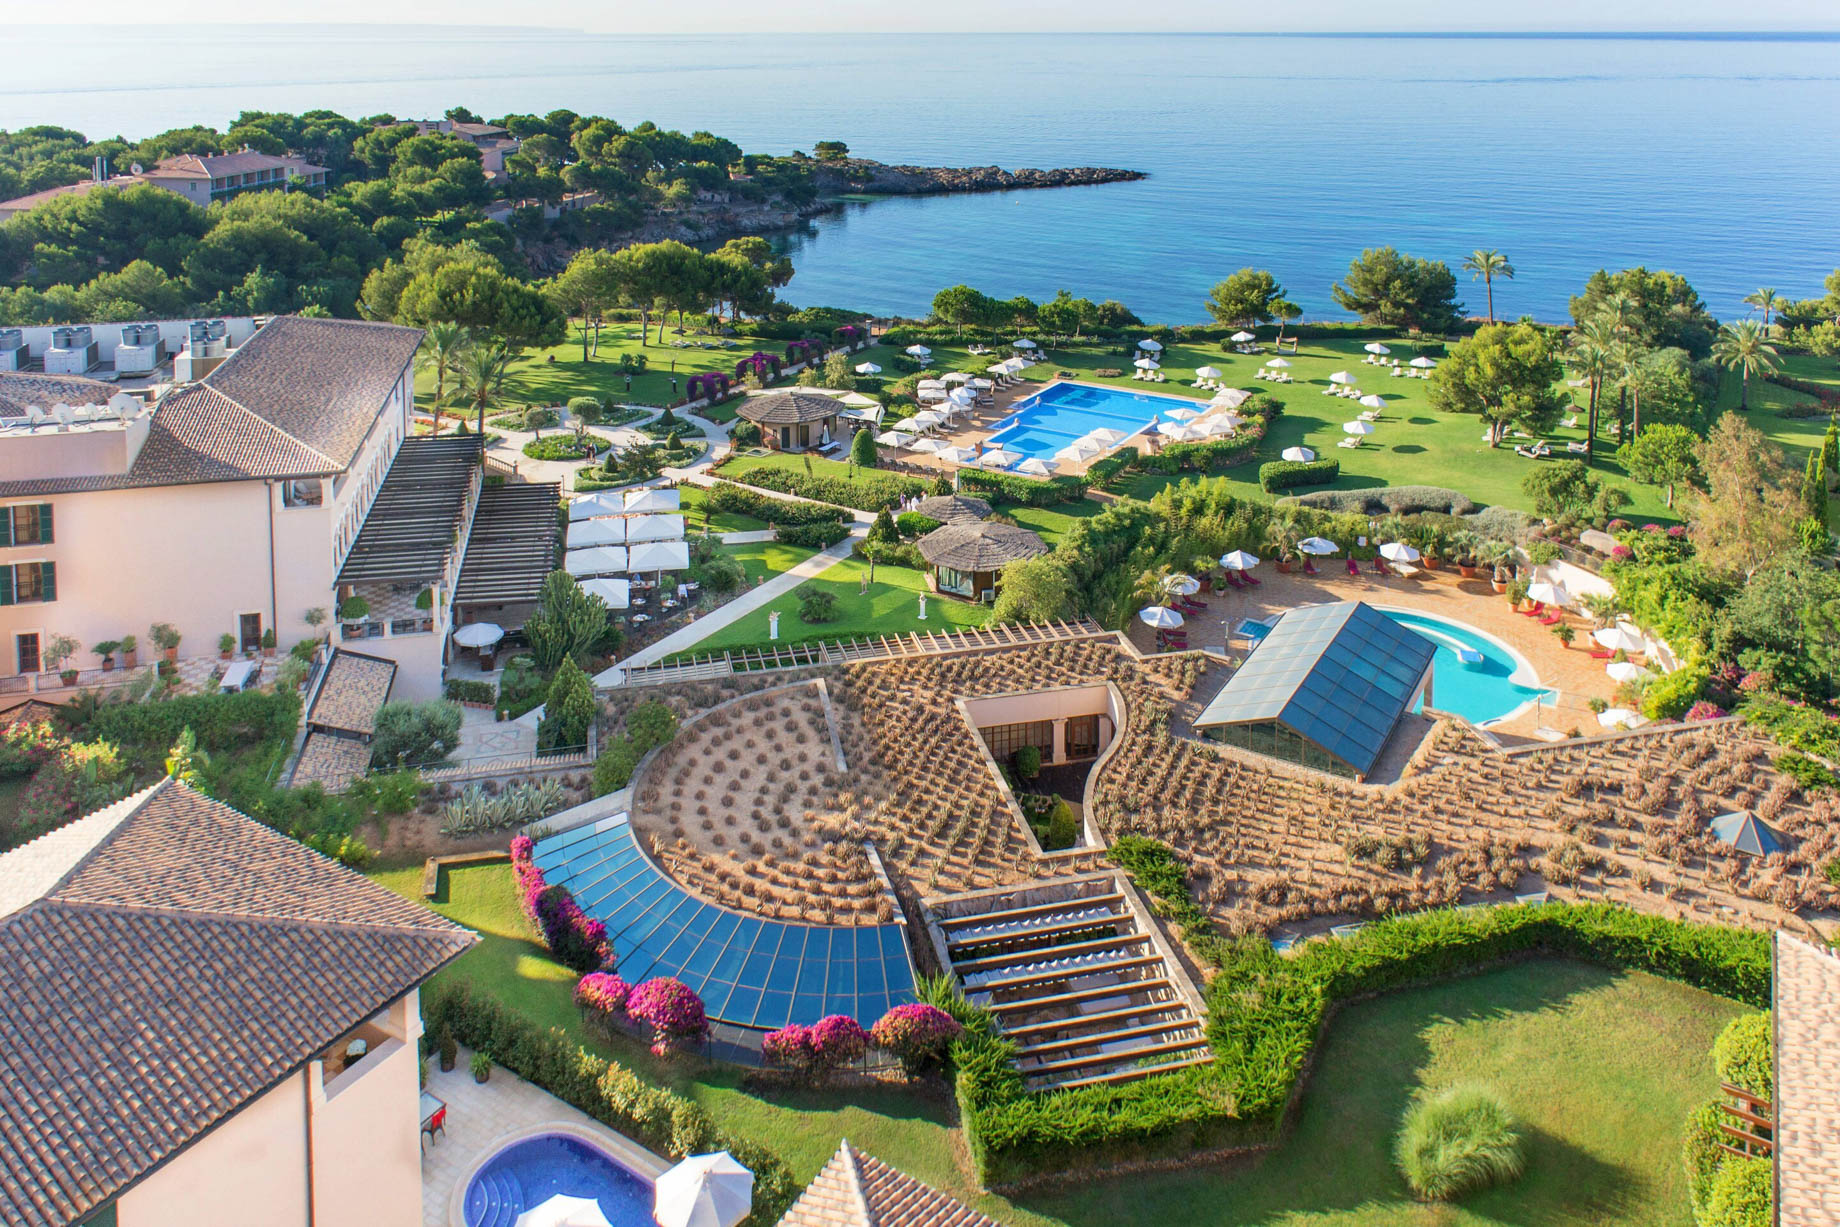 The St. Regis Mardavall Mallorca Resort - Palma de Mallorca, Spain - Exterior Aerial